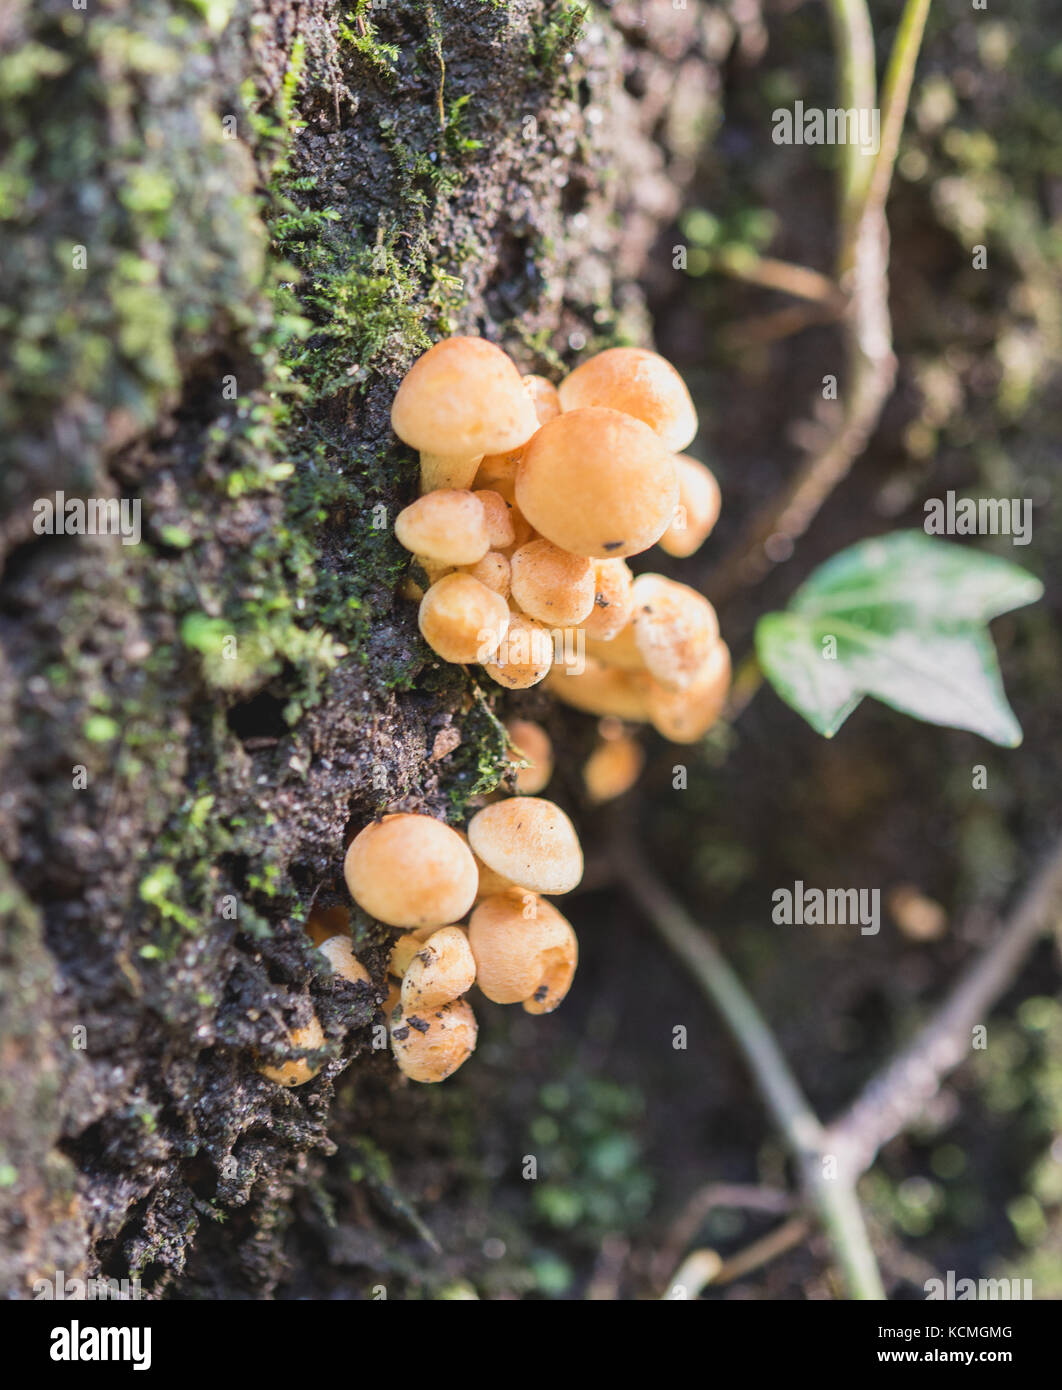 Small mushrooms on a tree Stock Photo